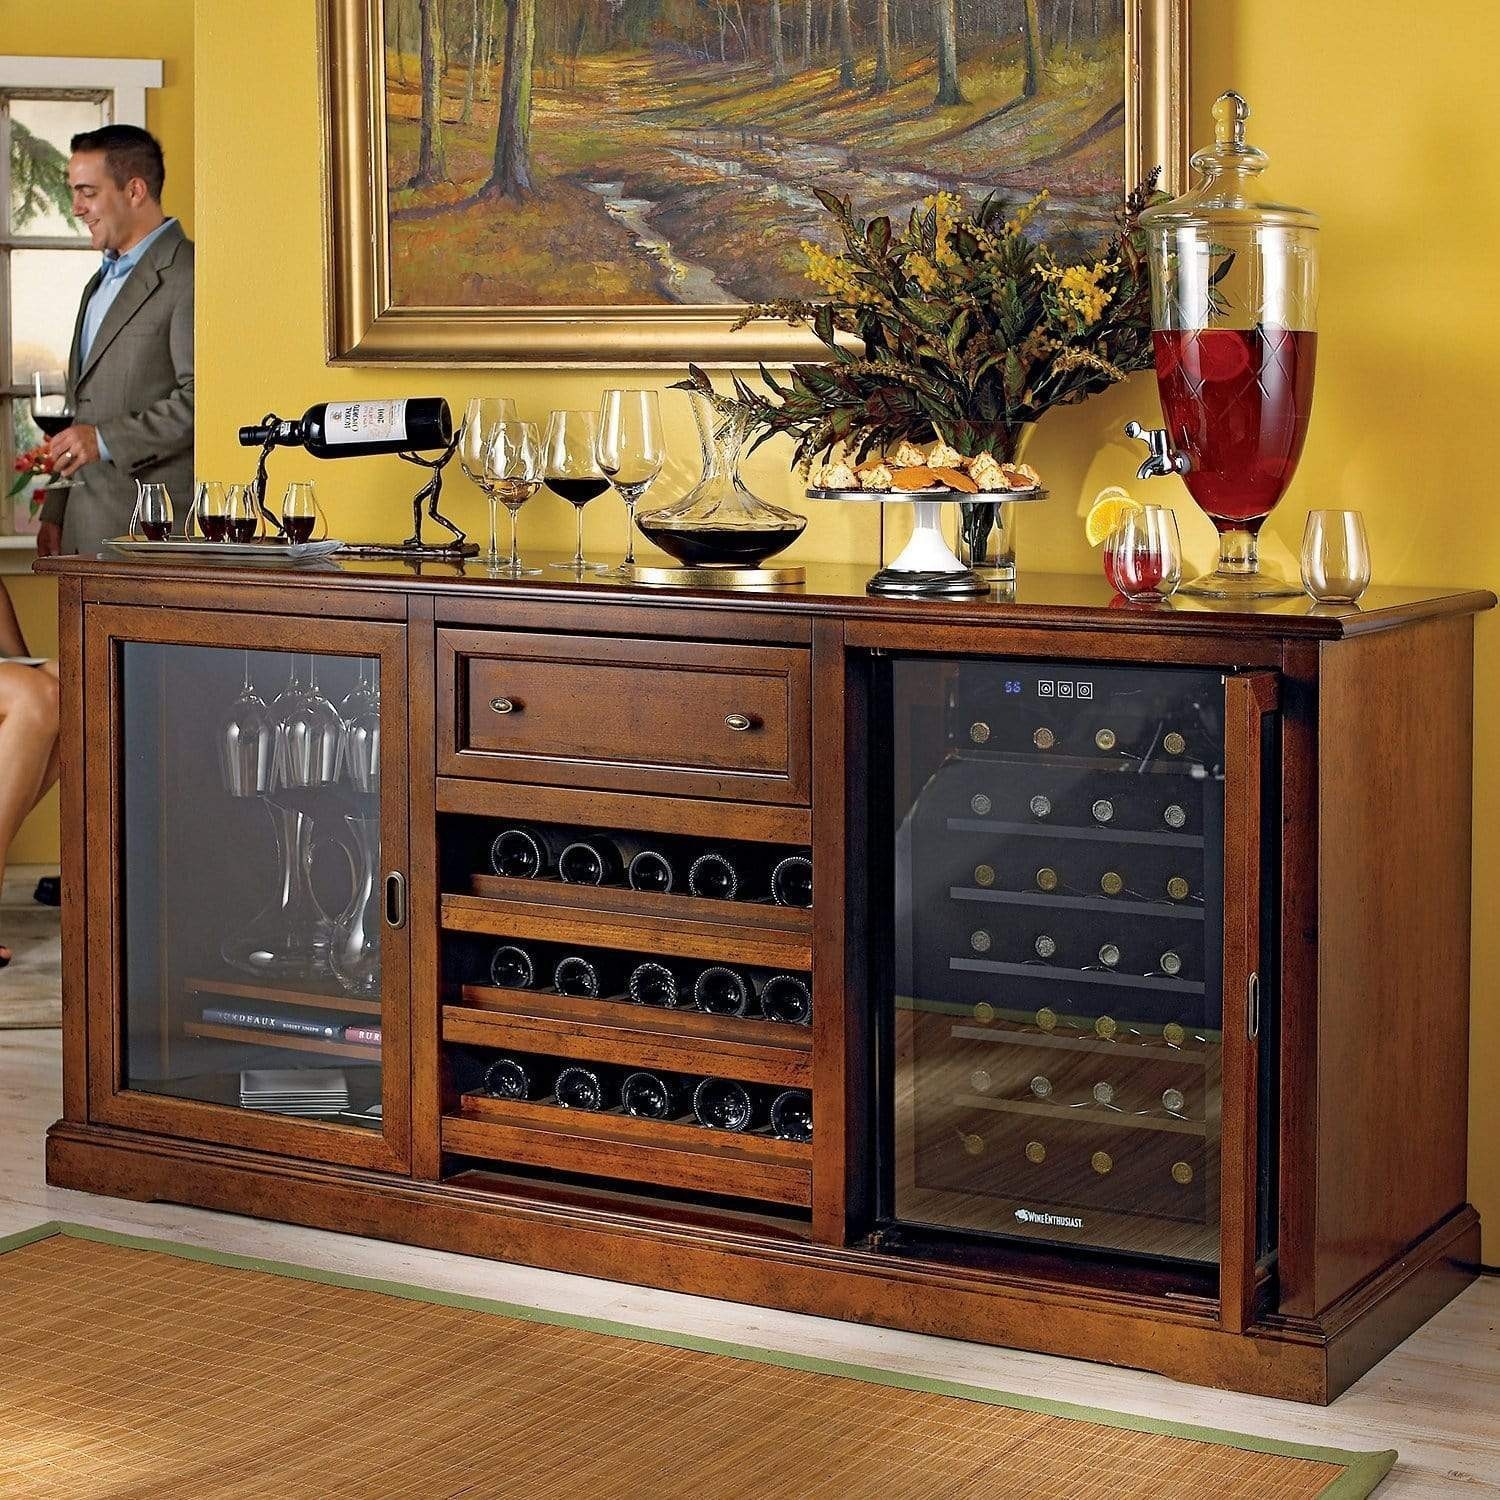 Wine bar furniture with refrigerator